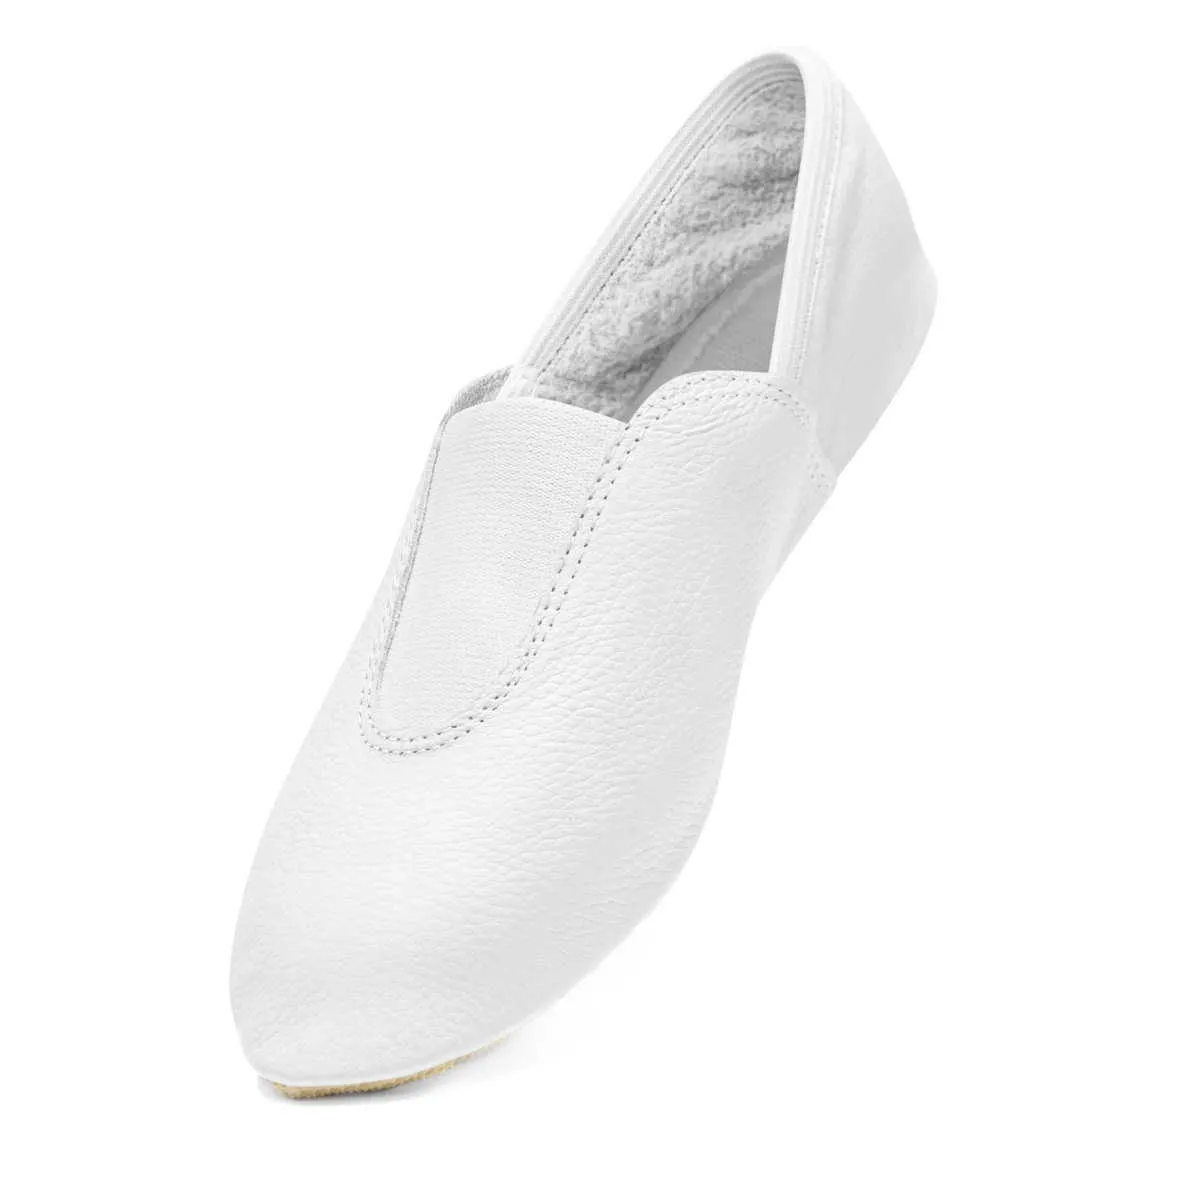 Chaussures de gymnastique blanches